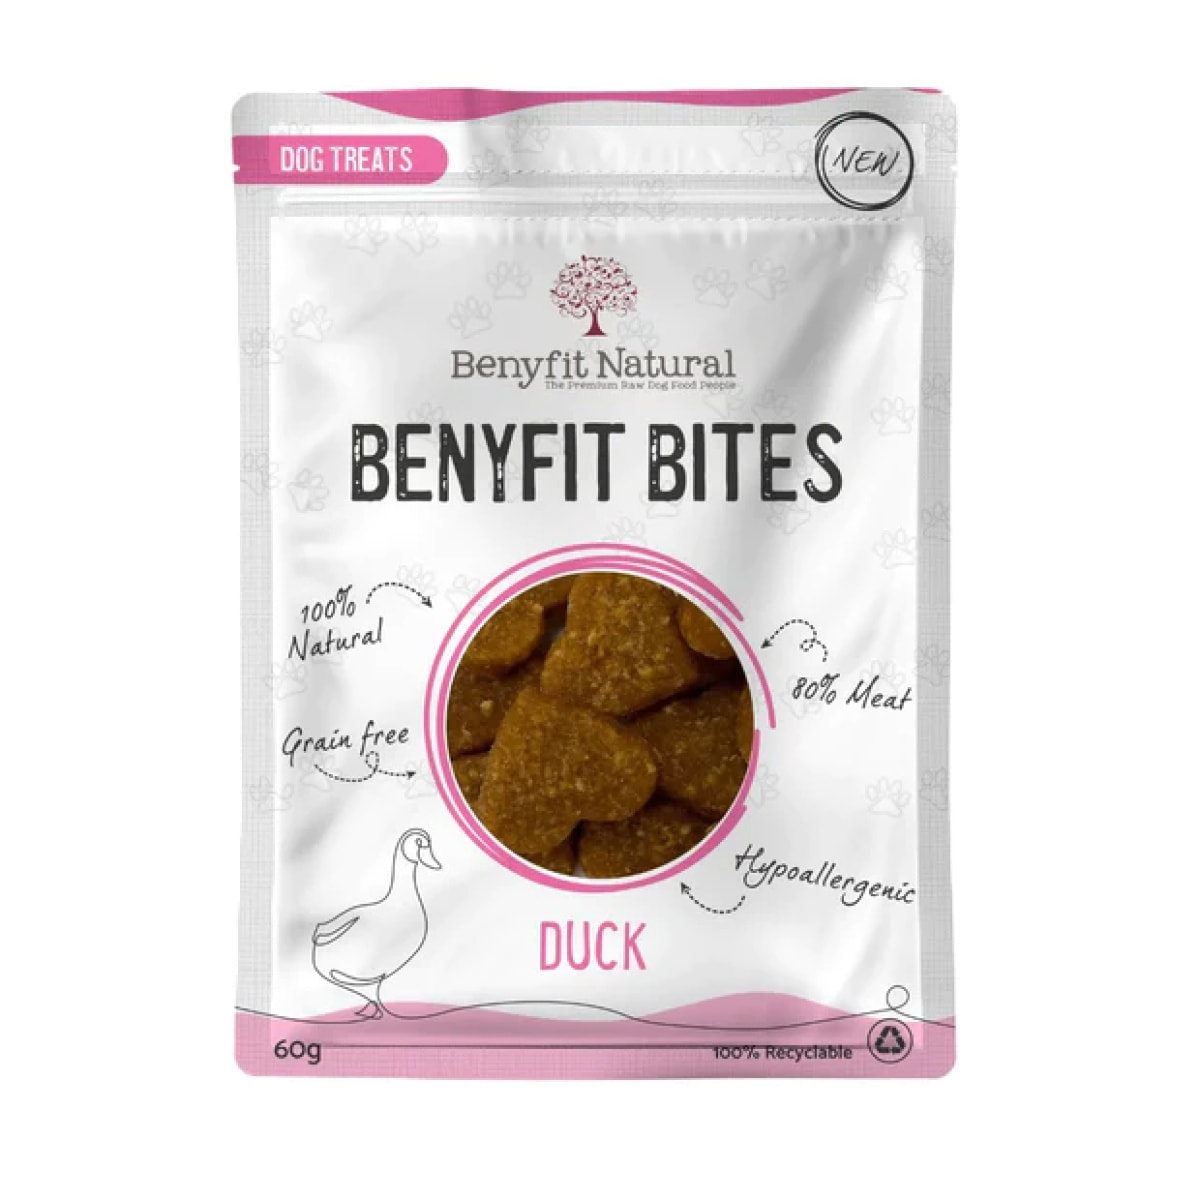 Benyfit Natural - Duck Bites 60g Main Image